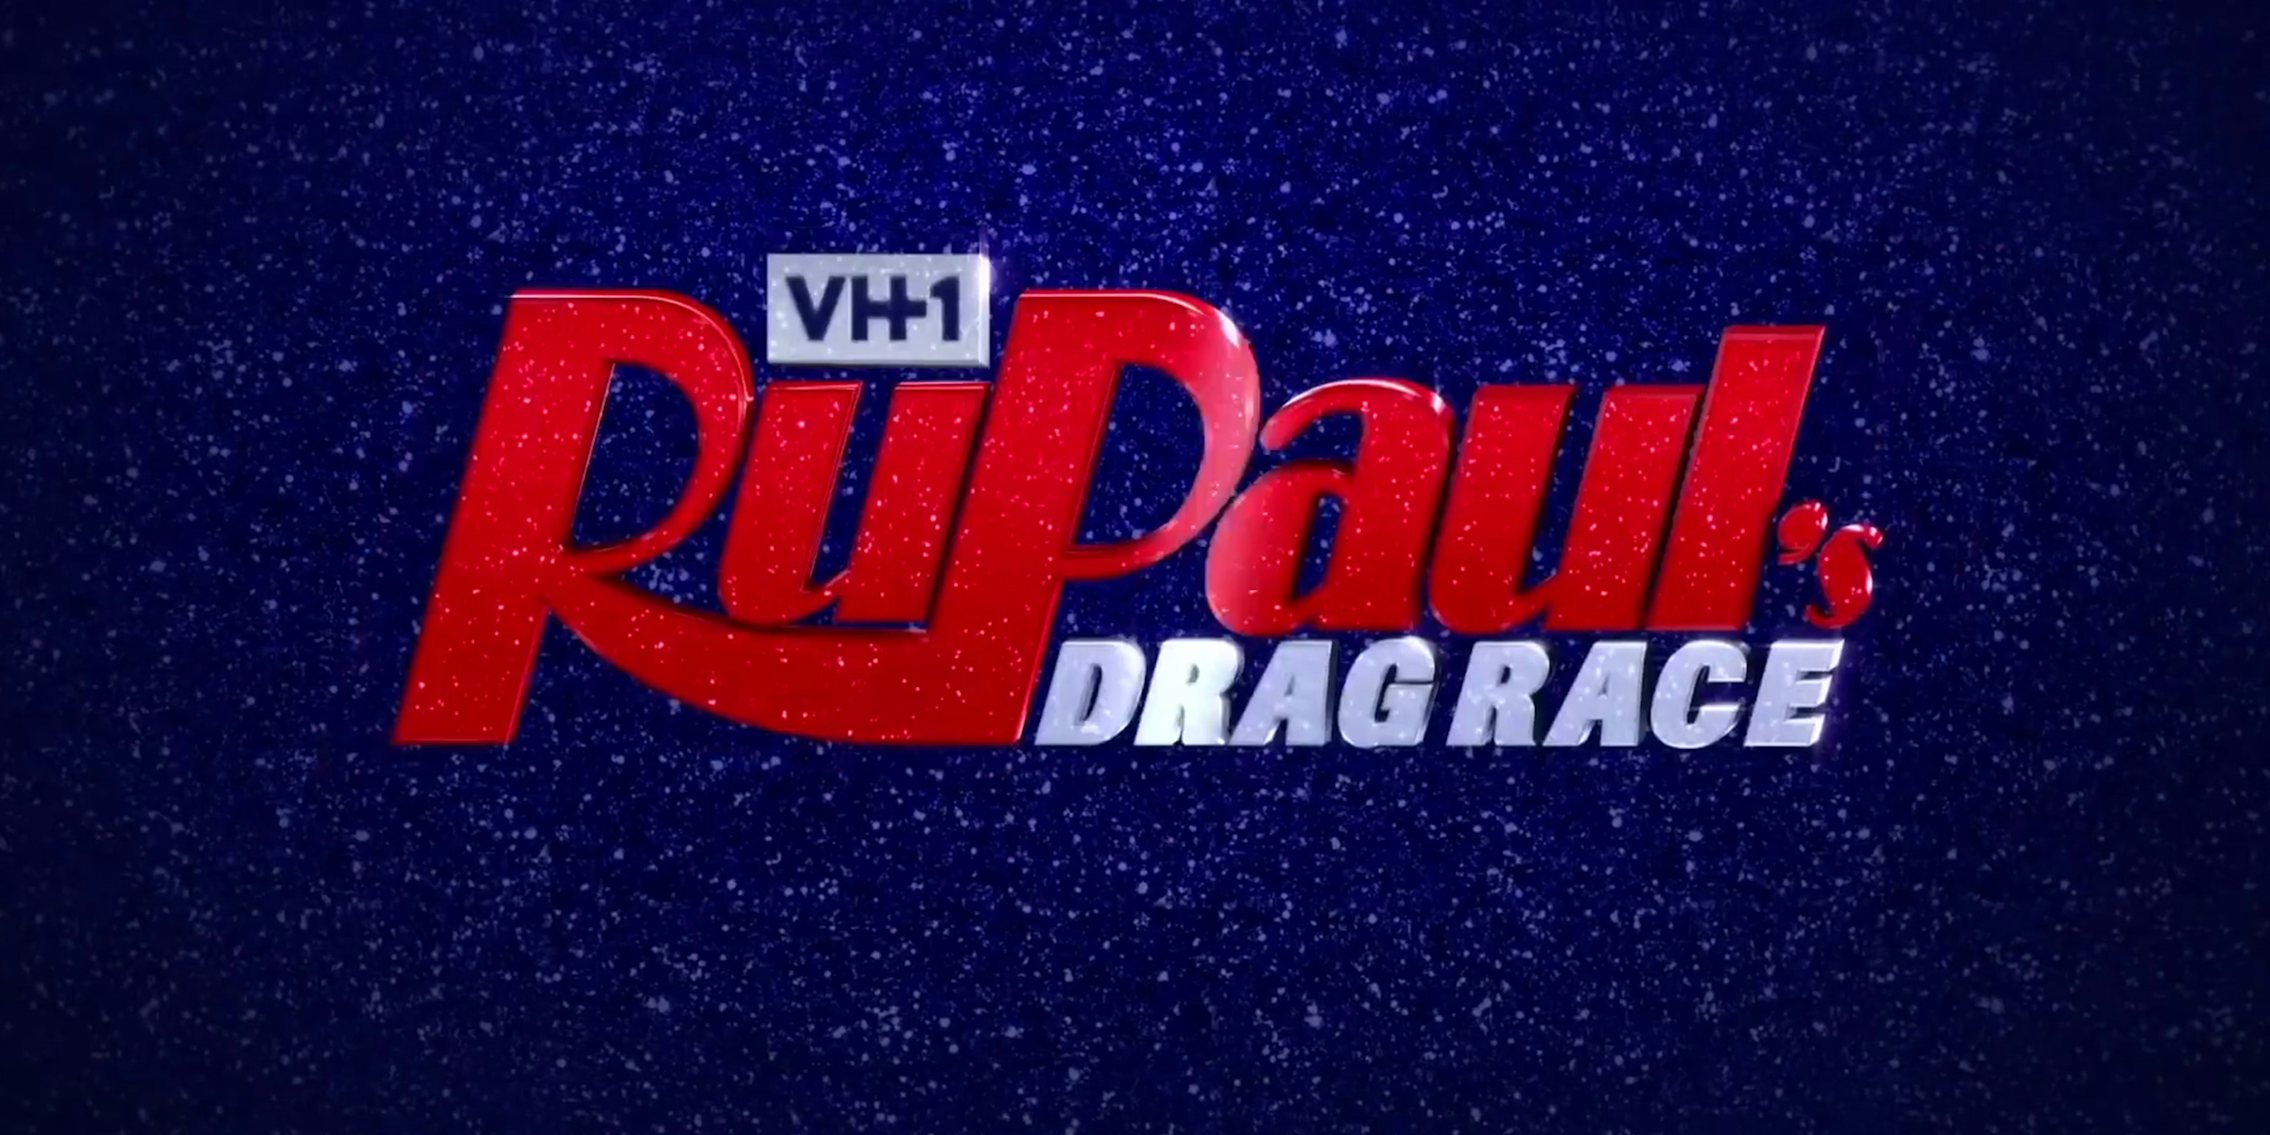 watch rupauls drag race season 12